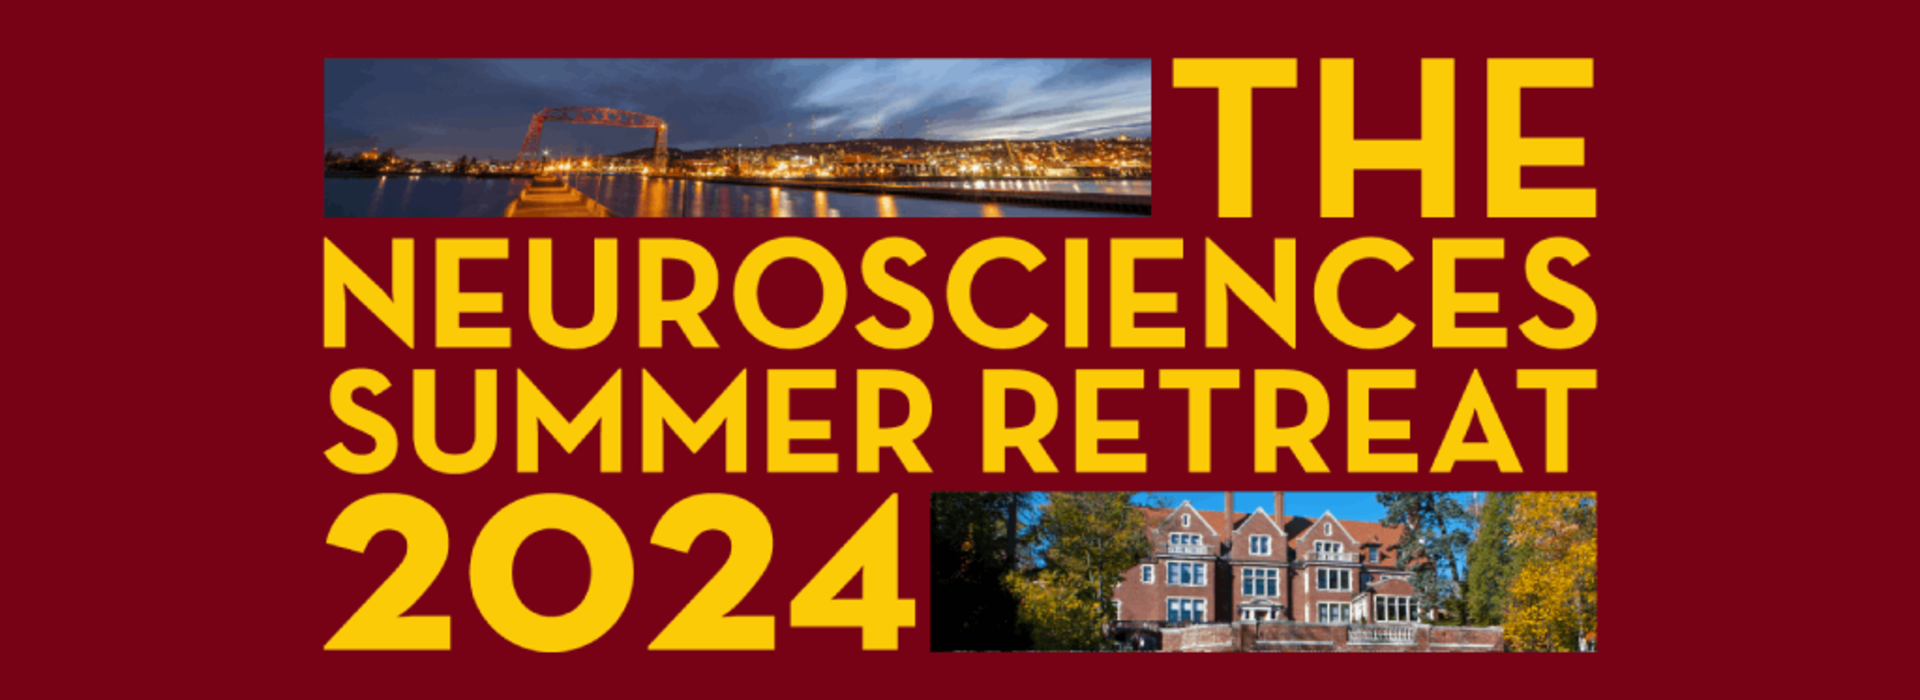 Neurosciences Retreat 2024 banner